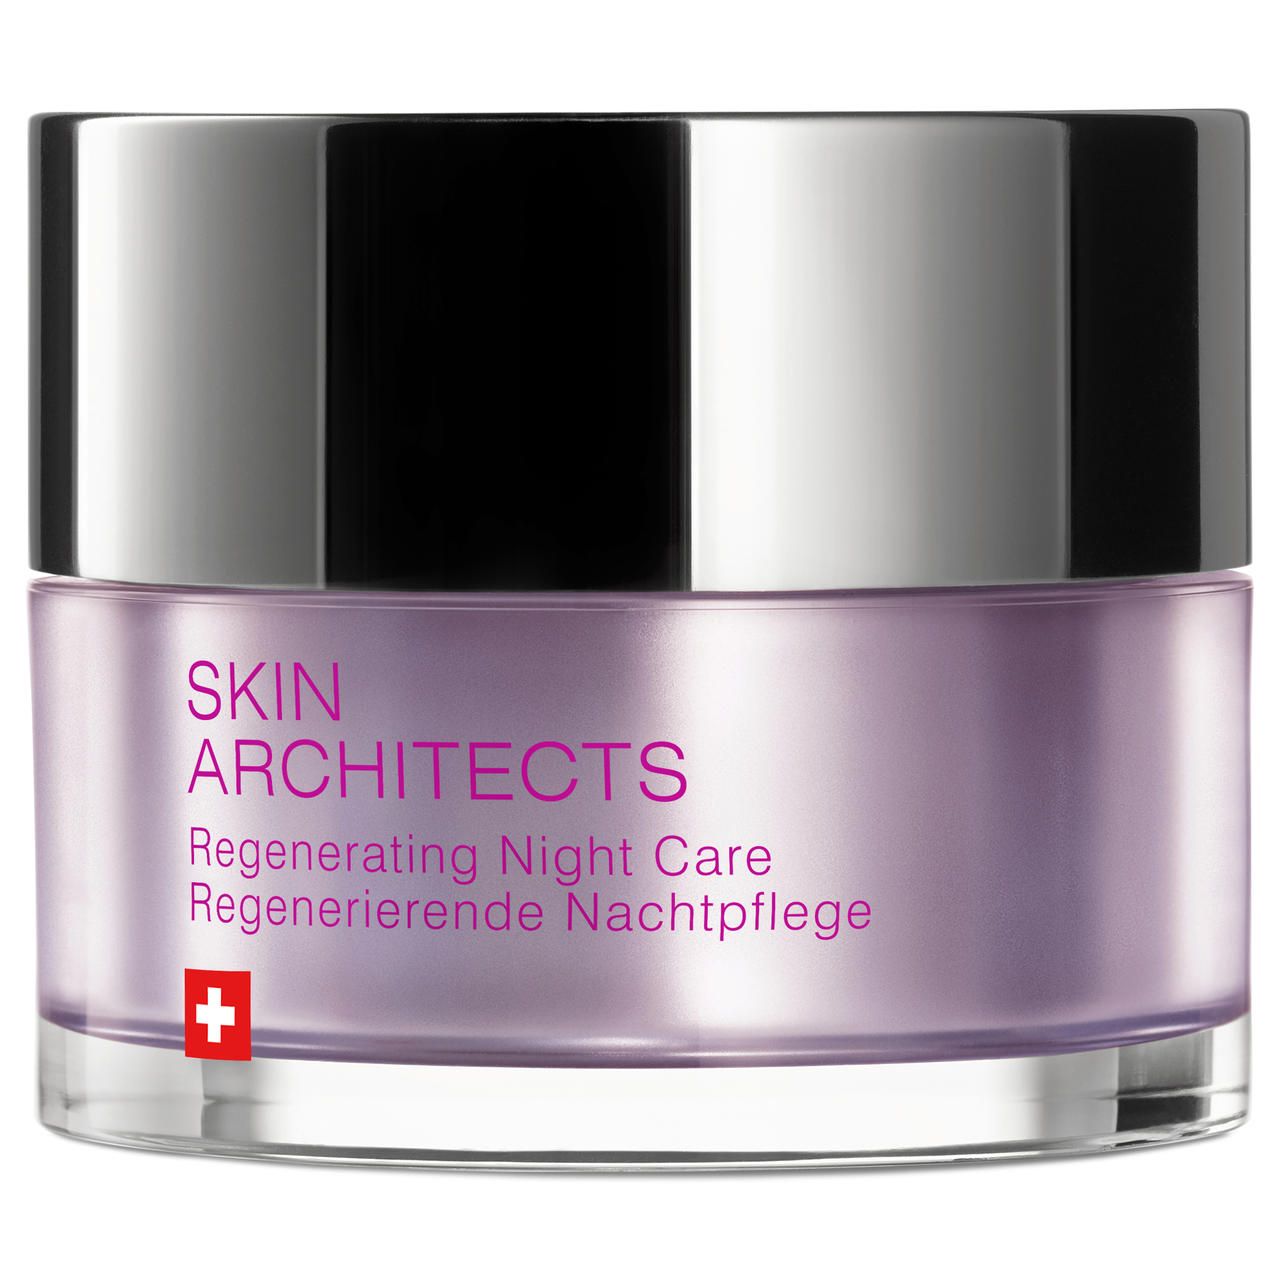 Artemis of Switzerland Skin Architects Regenerating Night Care